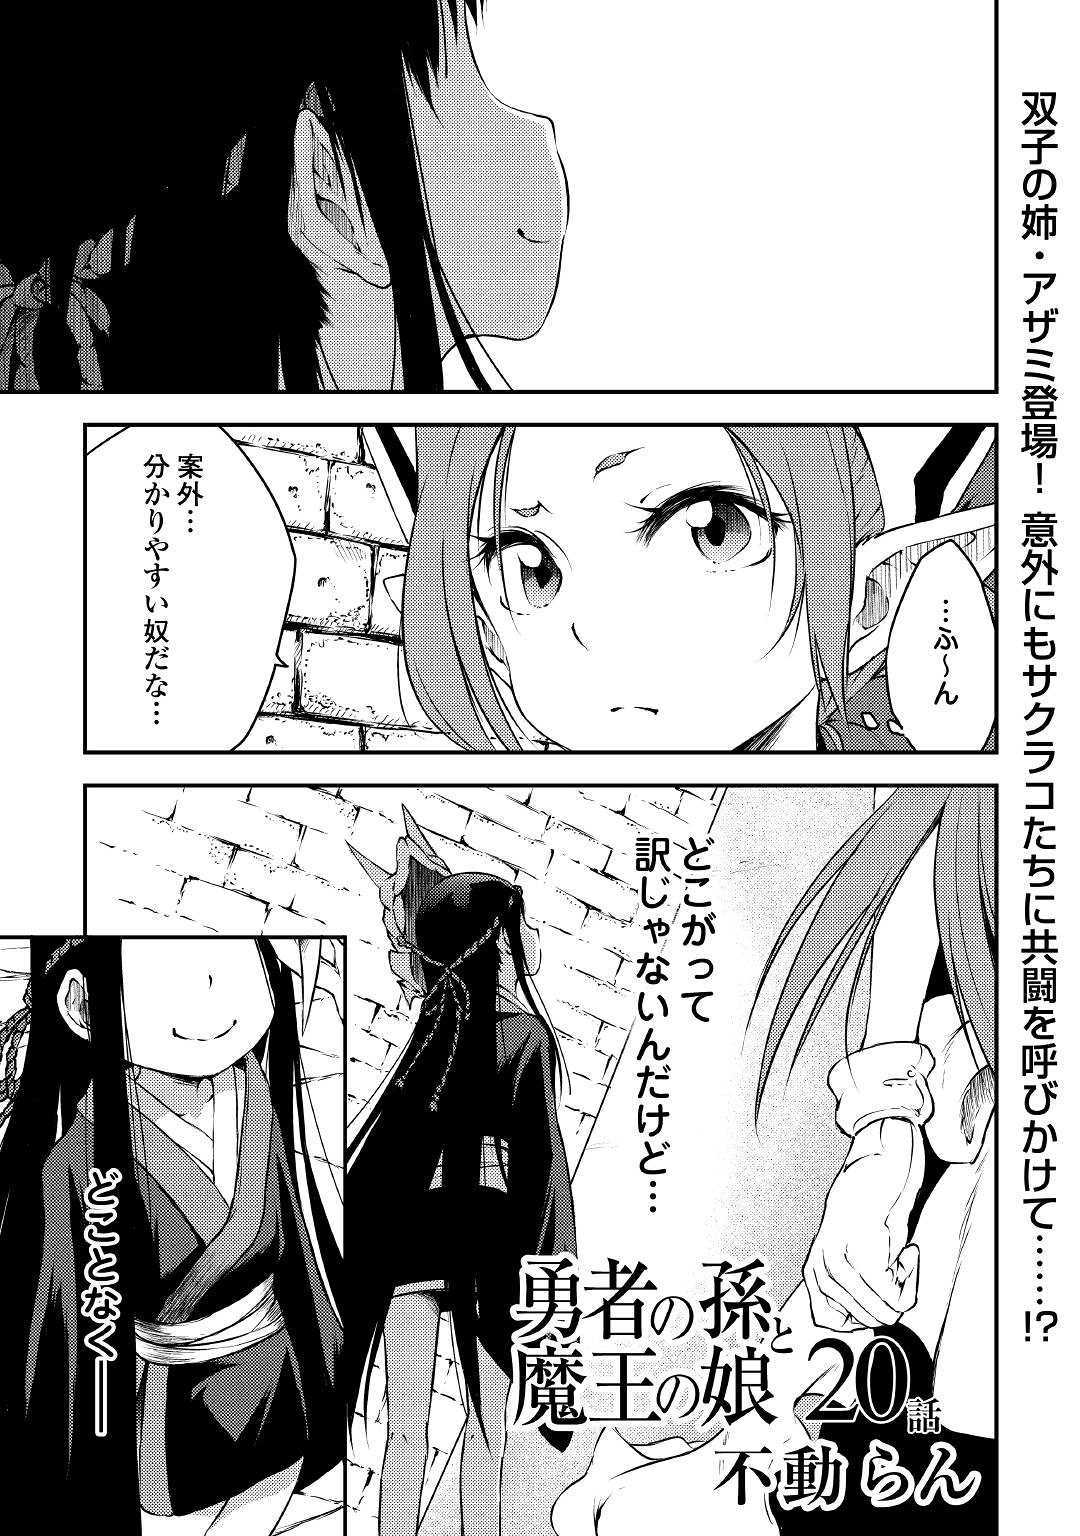 Yuusha no Mago to Maou no Musume - Chapter 20 - Page 1